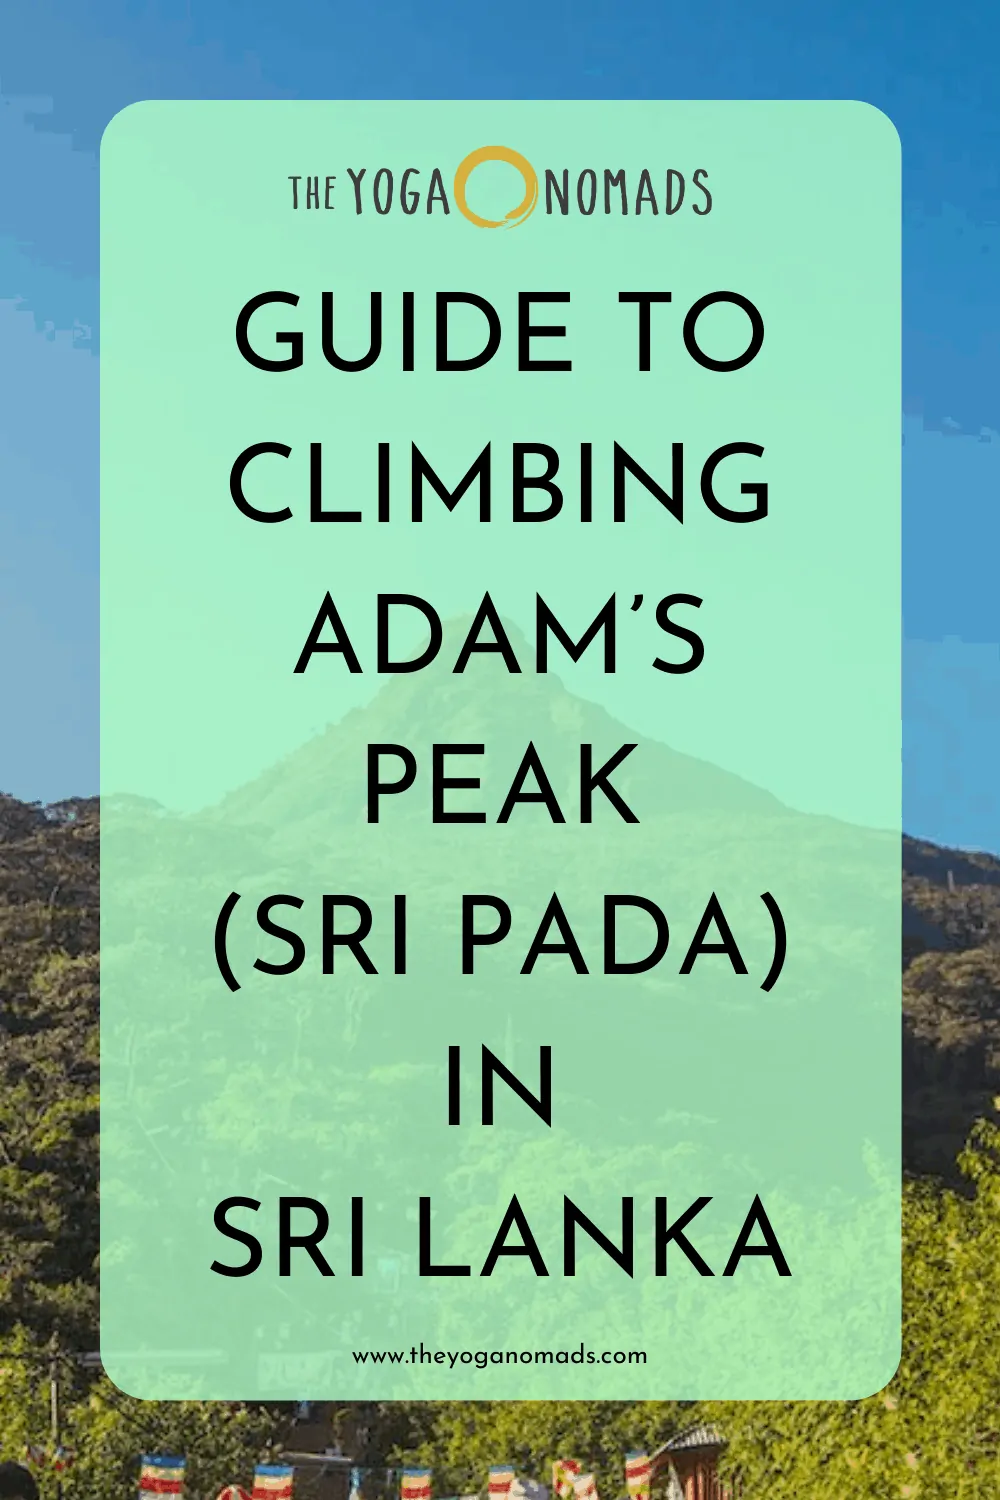 Guide to Climbing Adam's Peak in Sri Lanka